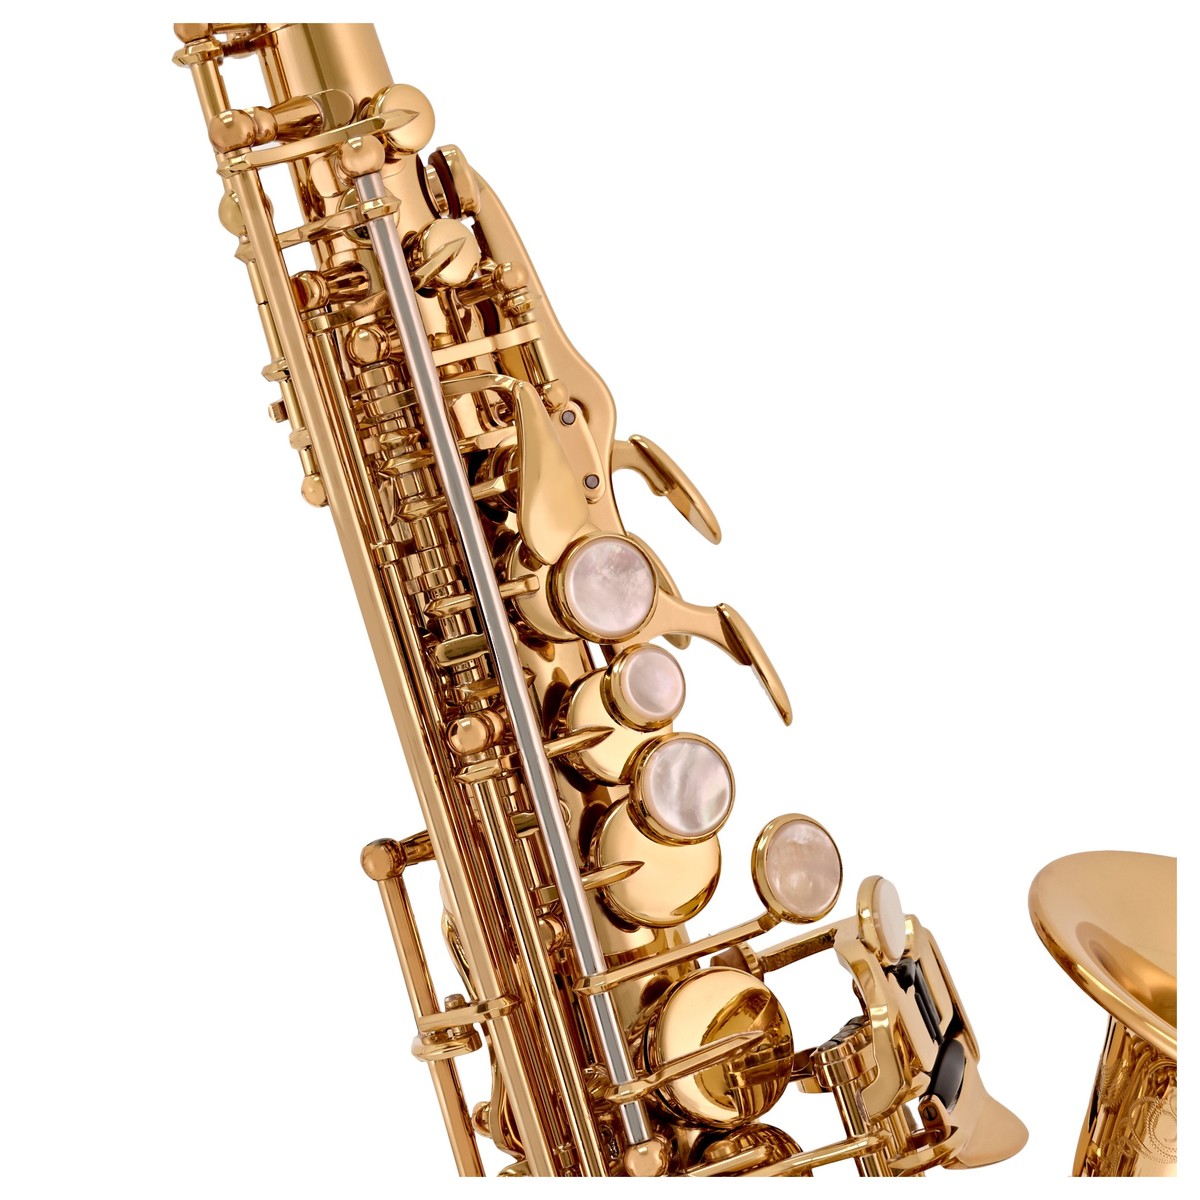 10 саксофон. Саксофон сопрано. Yanagisawa Soprano Saxophone. Модель саксофона 180 градусов. Yanagisawa Curved Soprano Saxophone.